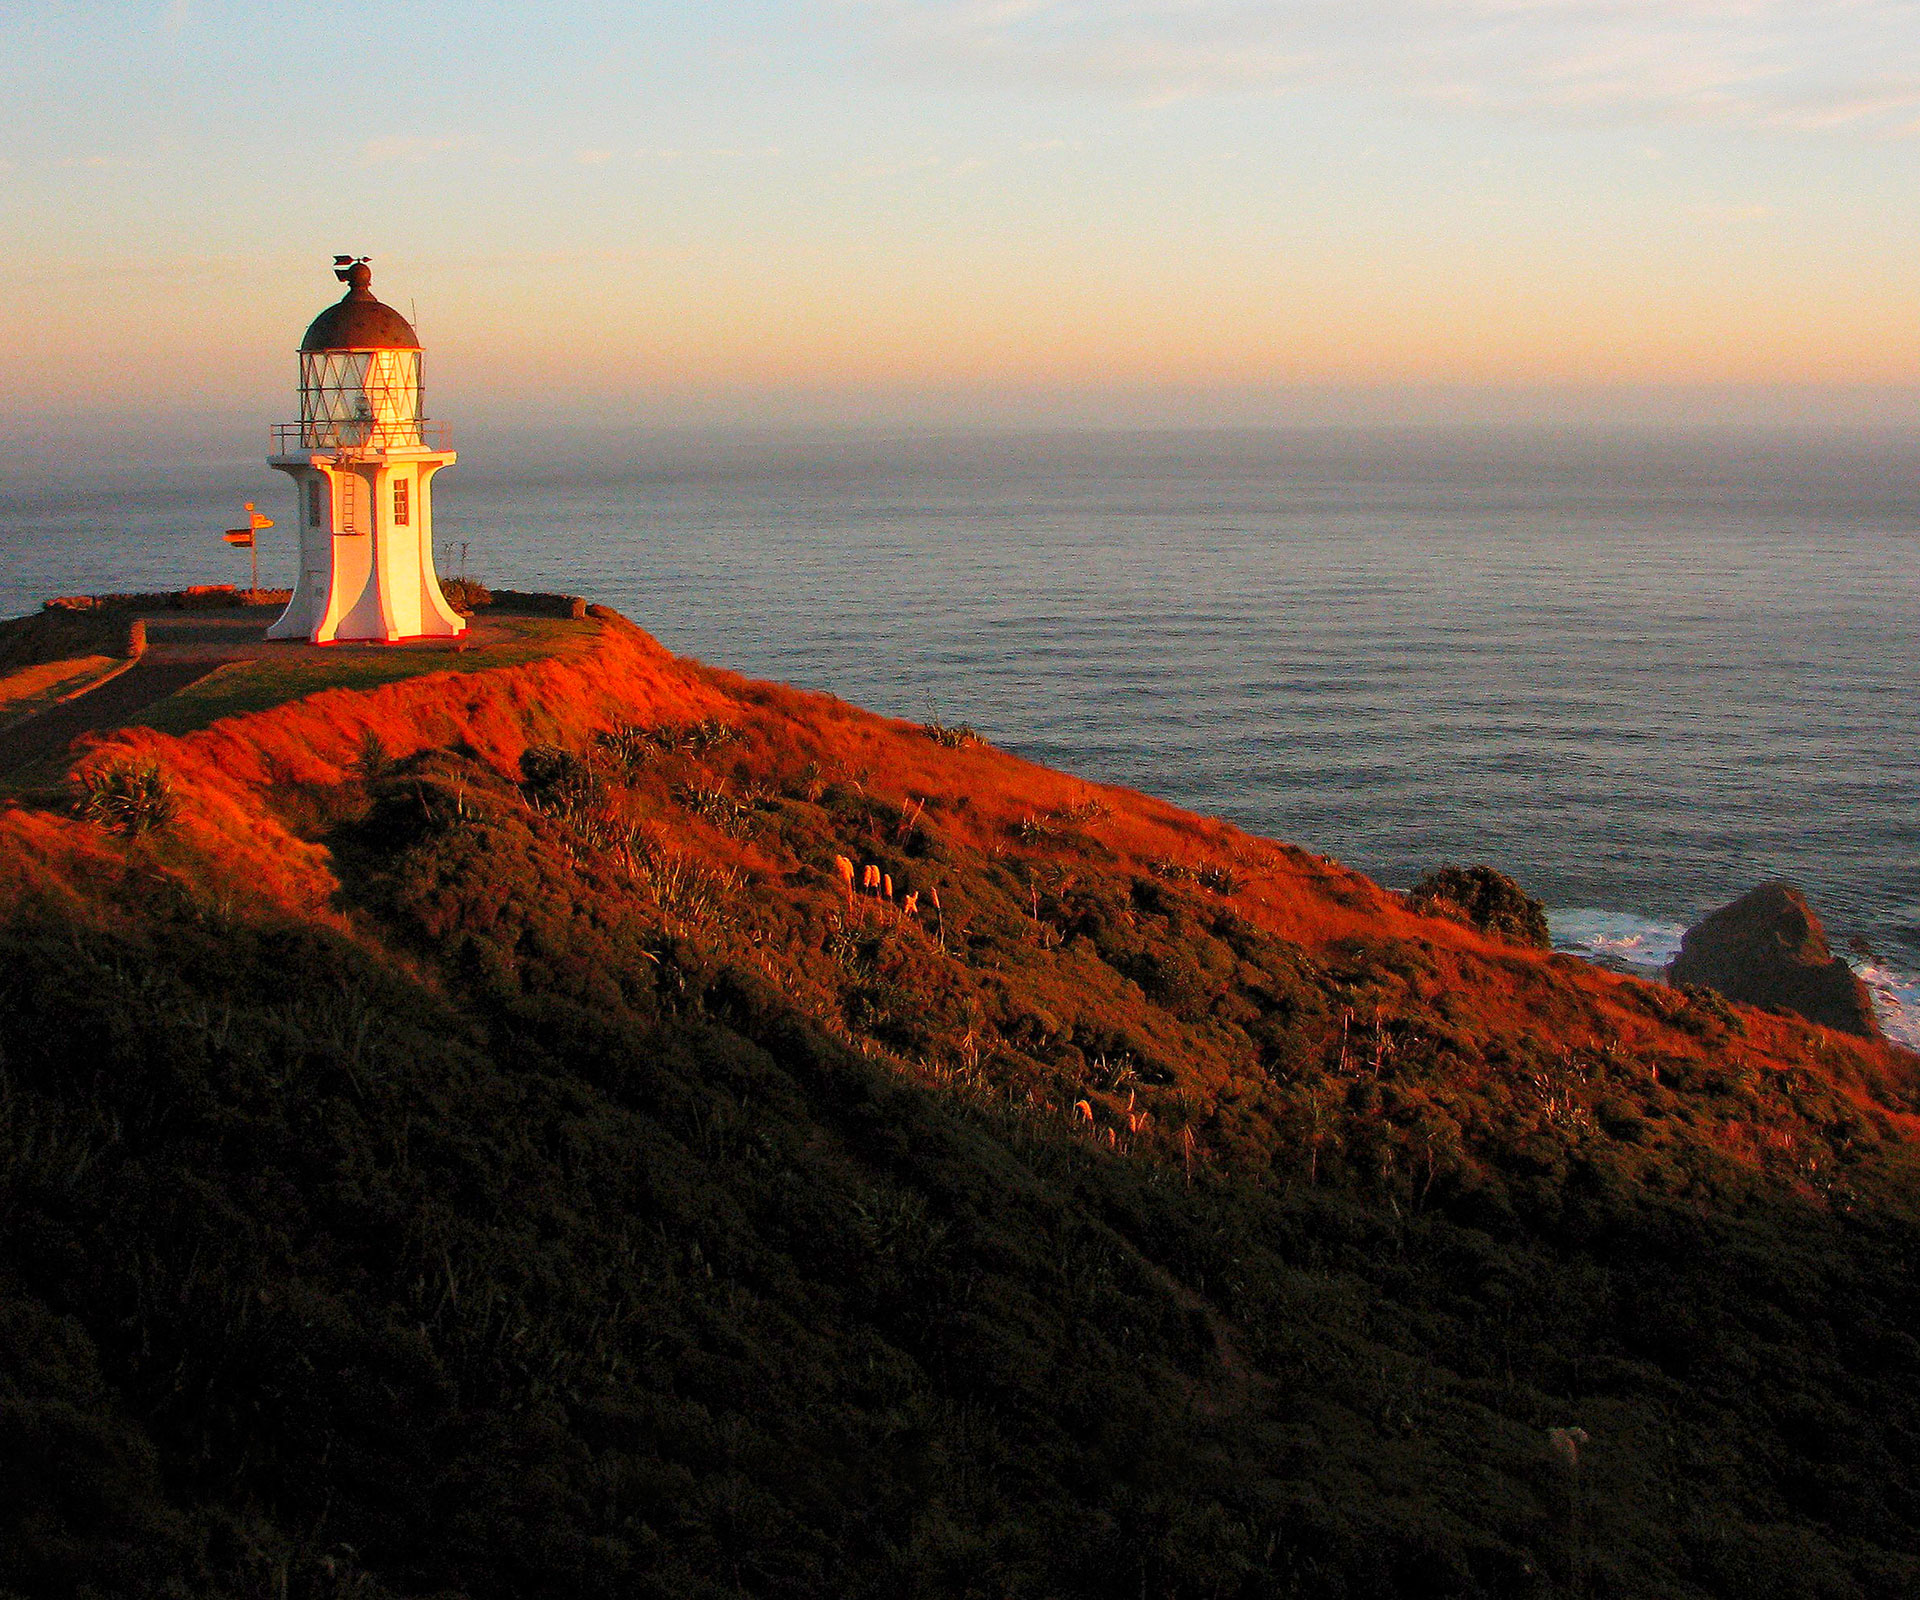 The Cape Reinga lighthouse.